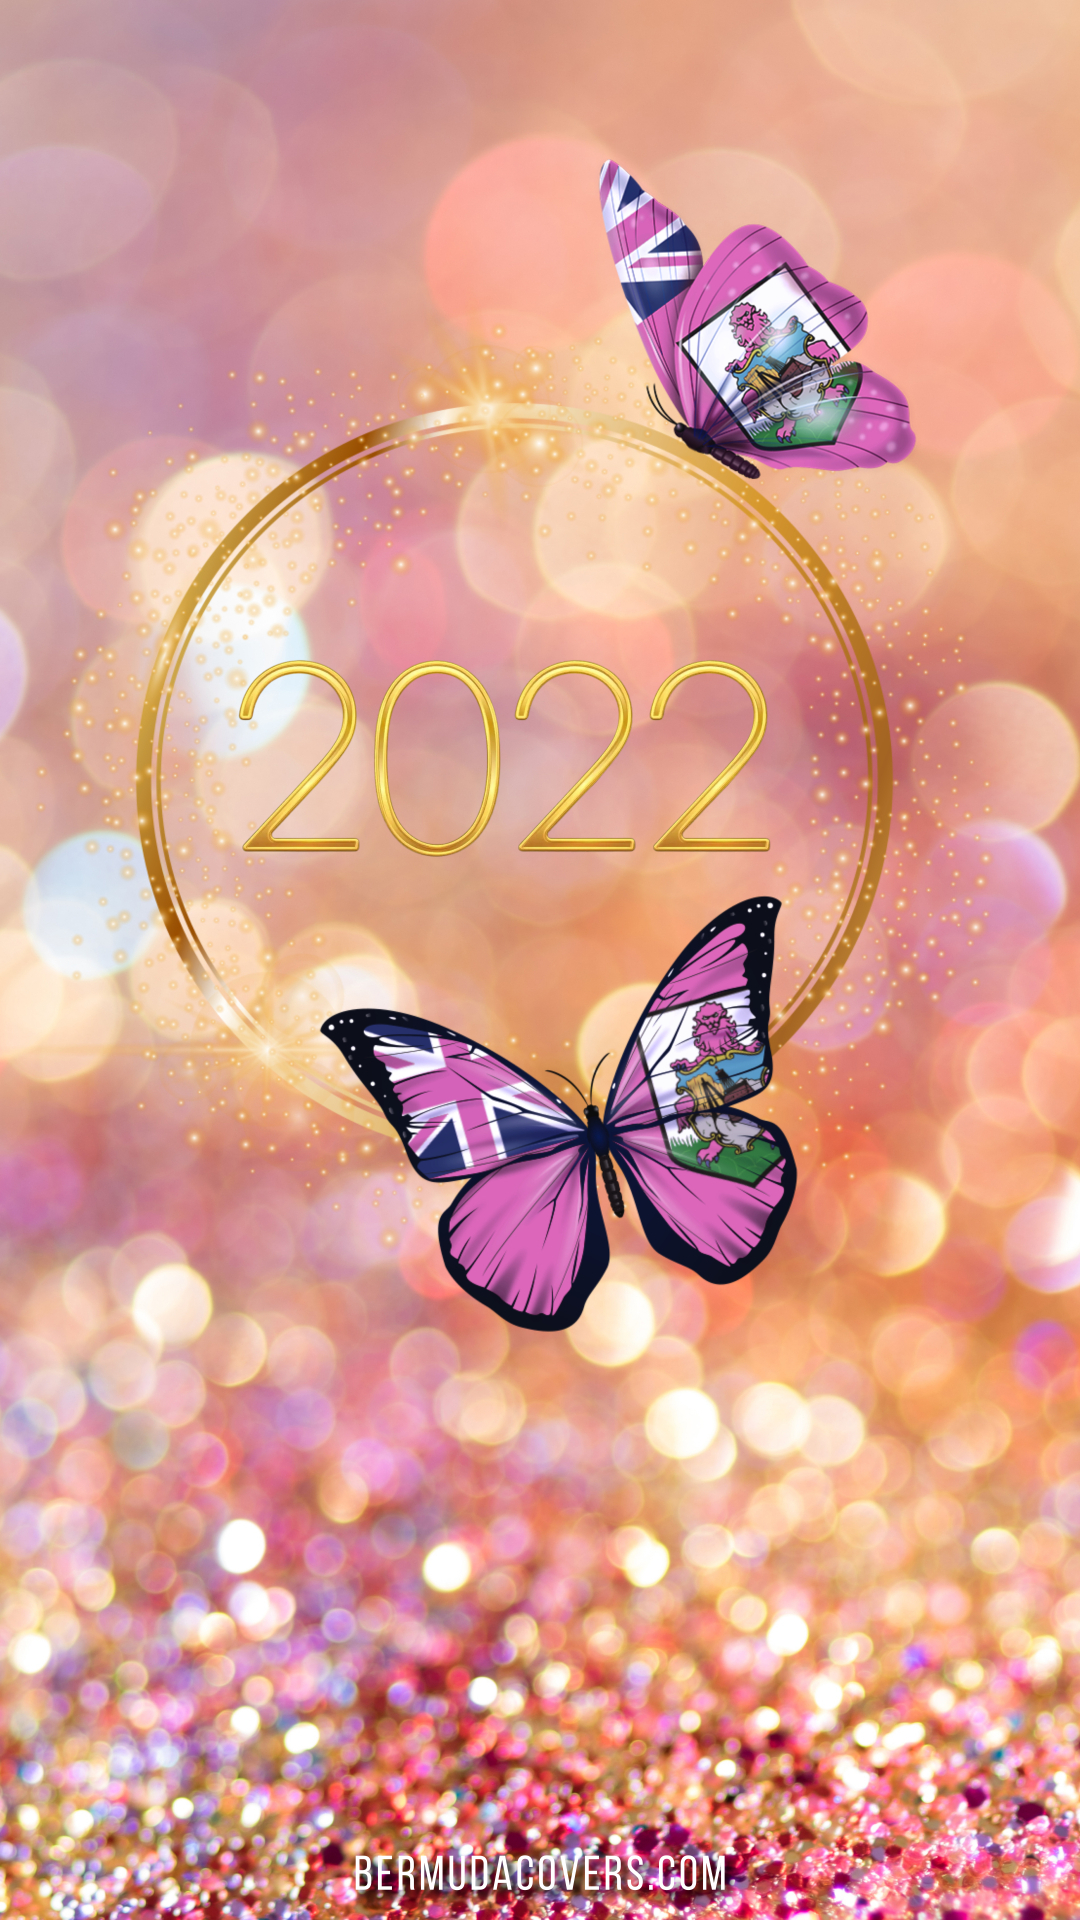 2022 Glitter Pink Bermuda Flag Butterfly Golden Circle graphic design Bermudian wallpaper r92304923 (4)